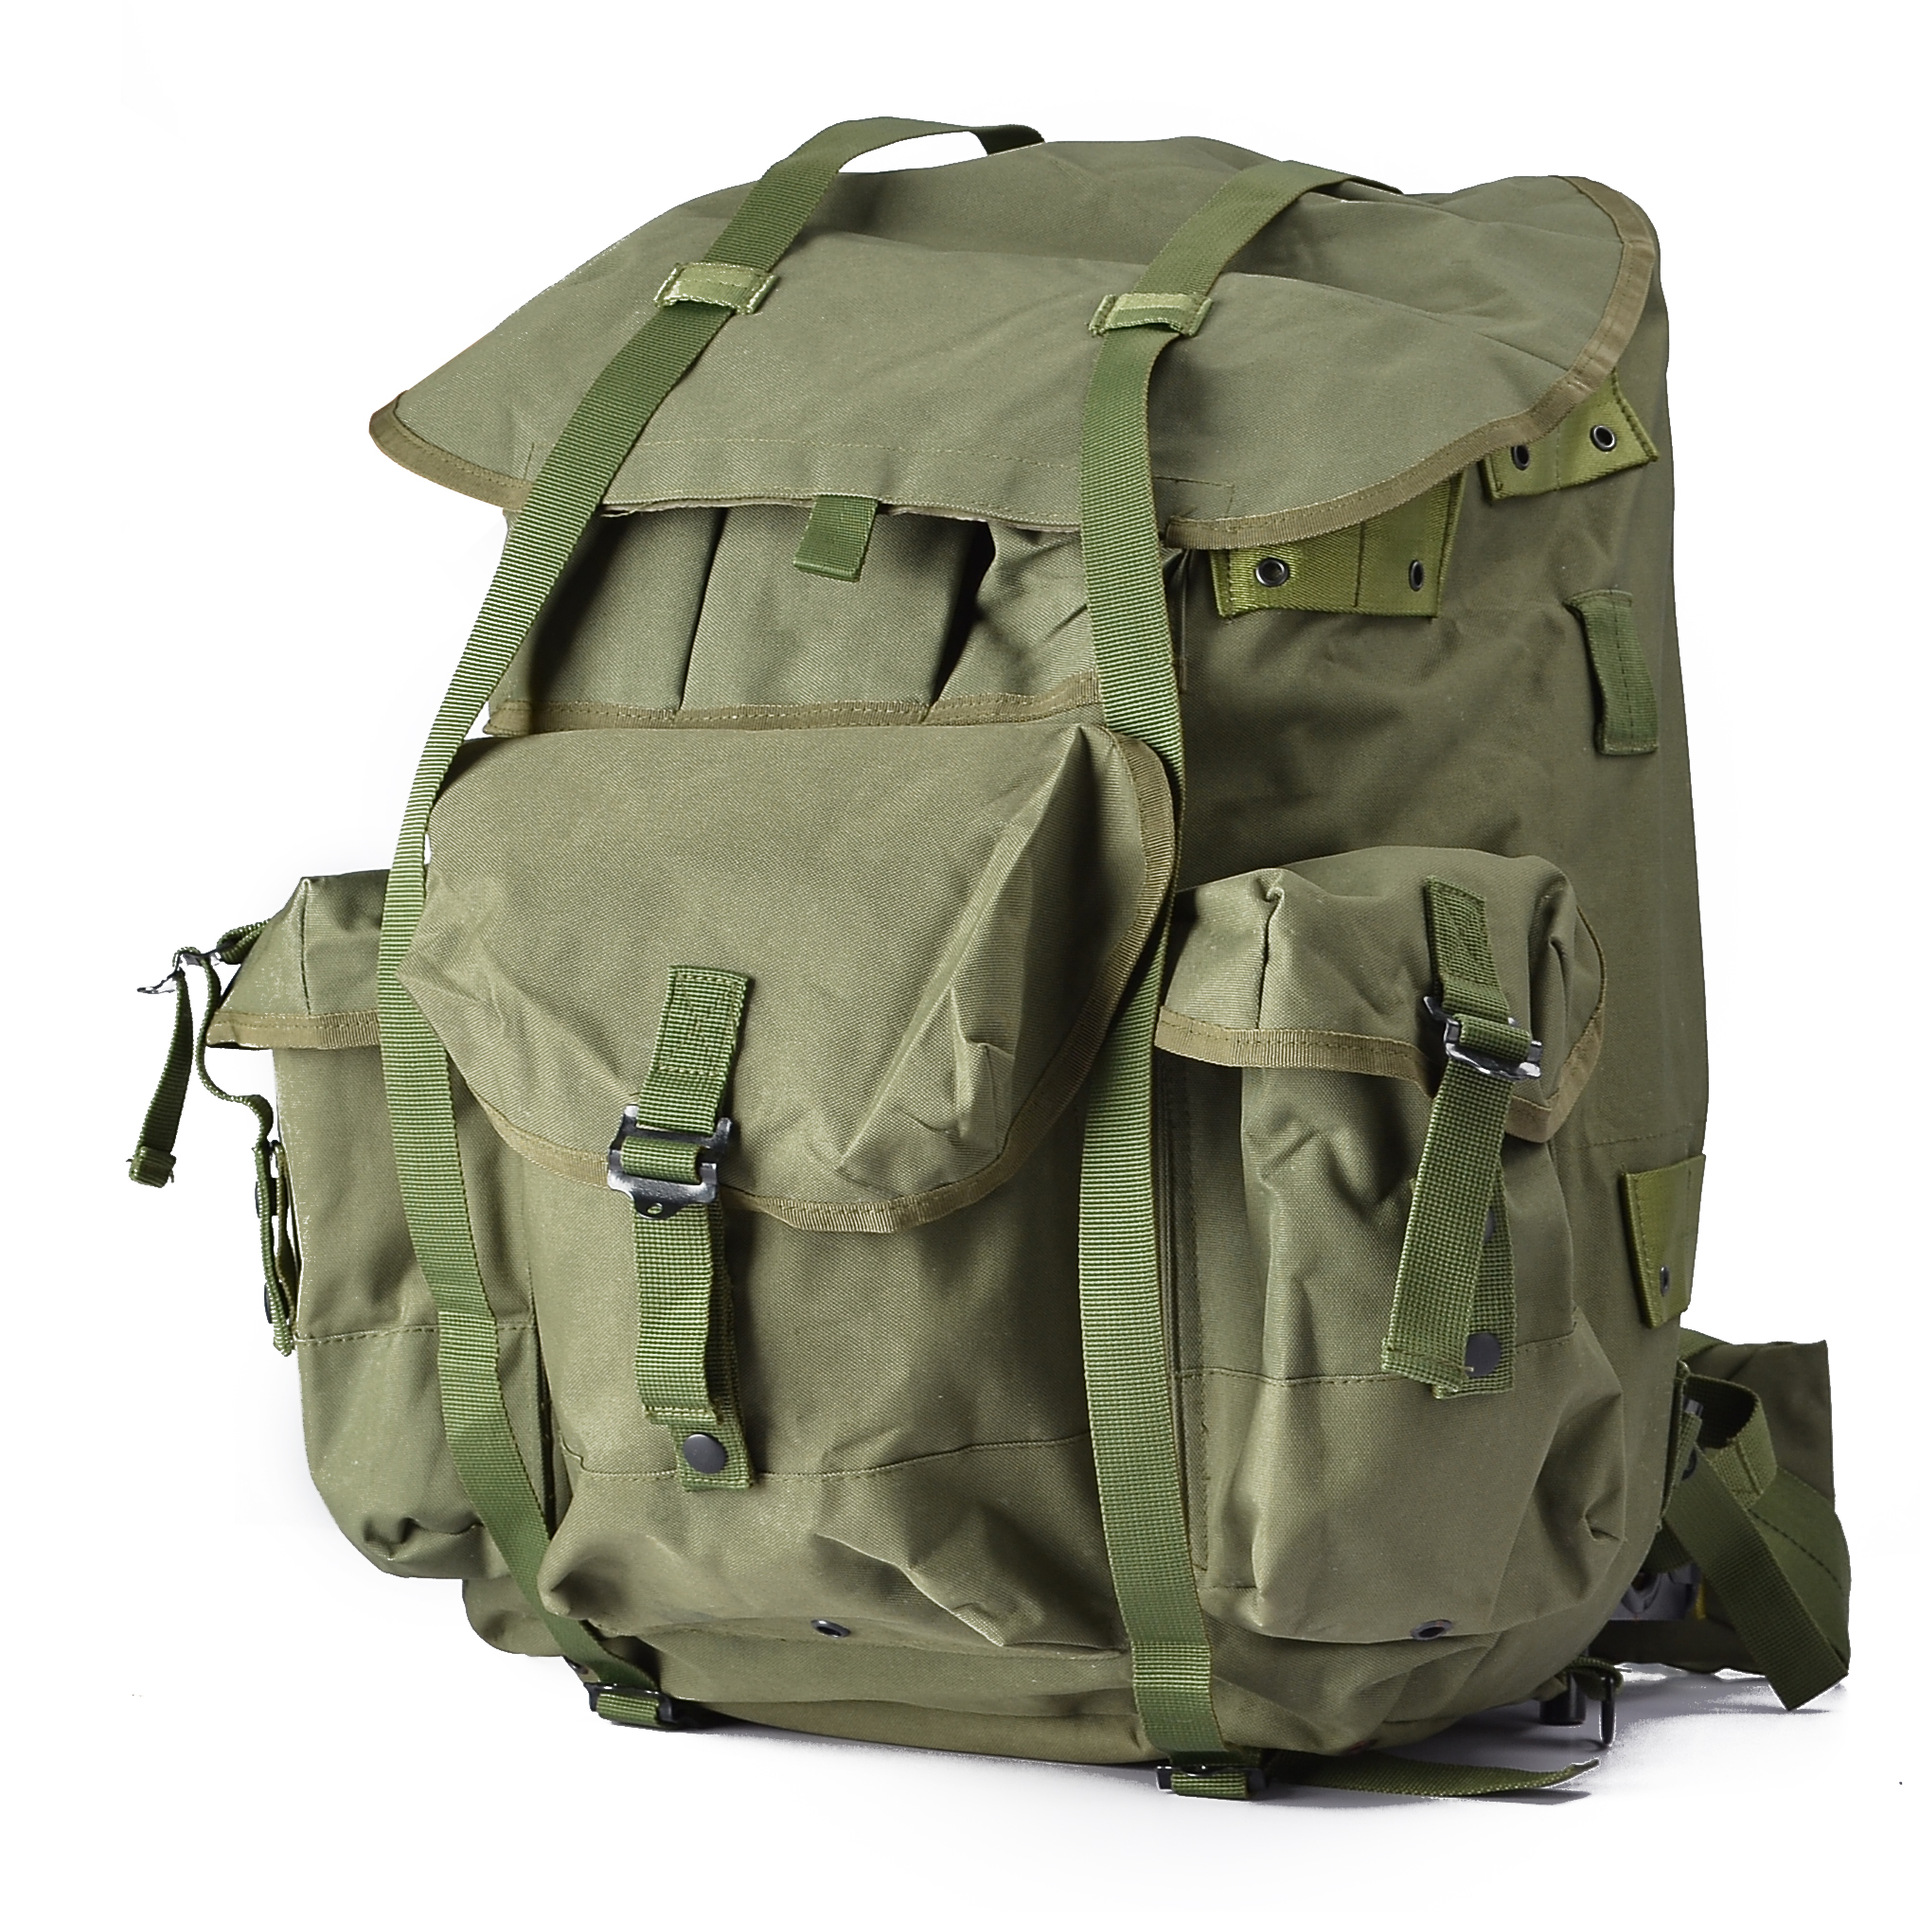 LV迷你背包图片 M41562女士休闲包包 LV背包官网新款图片 - 七七奢侈品